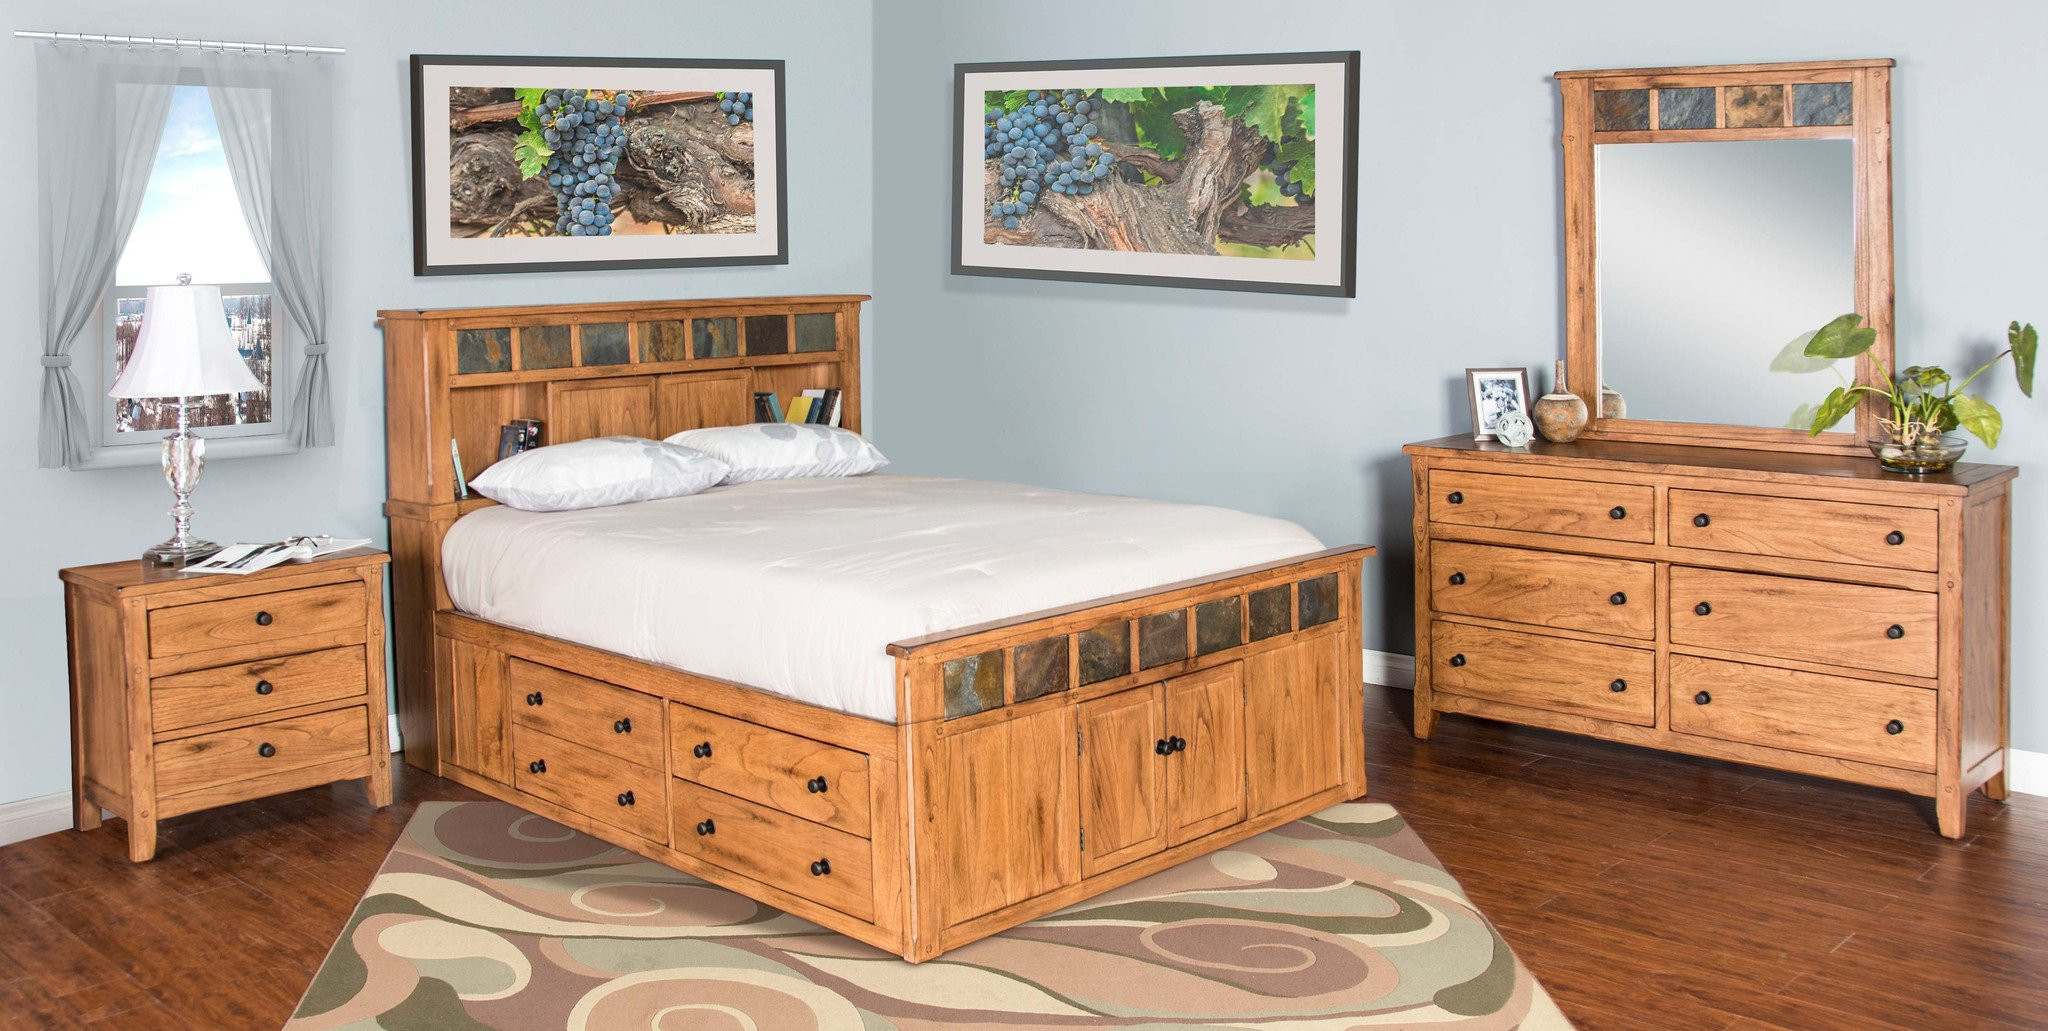 Rustic King Size Bedroom Sets
 Sedona Rustic Petite Storage Bedroom Suite E King Size